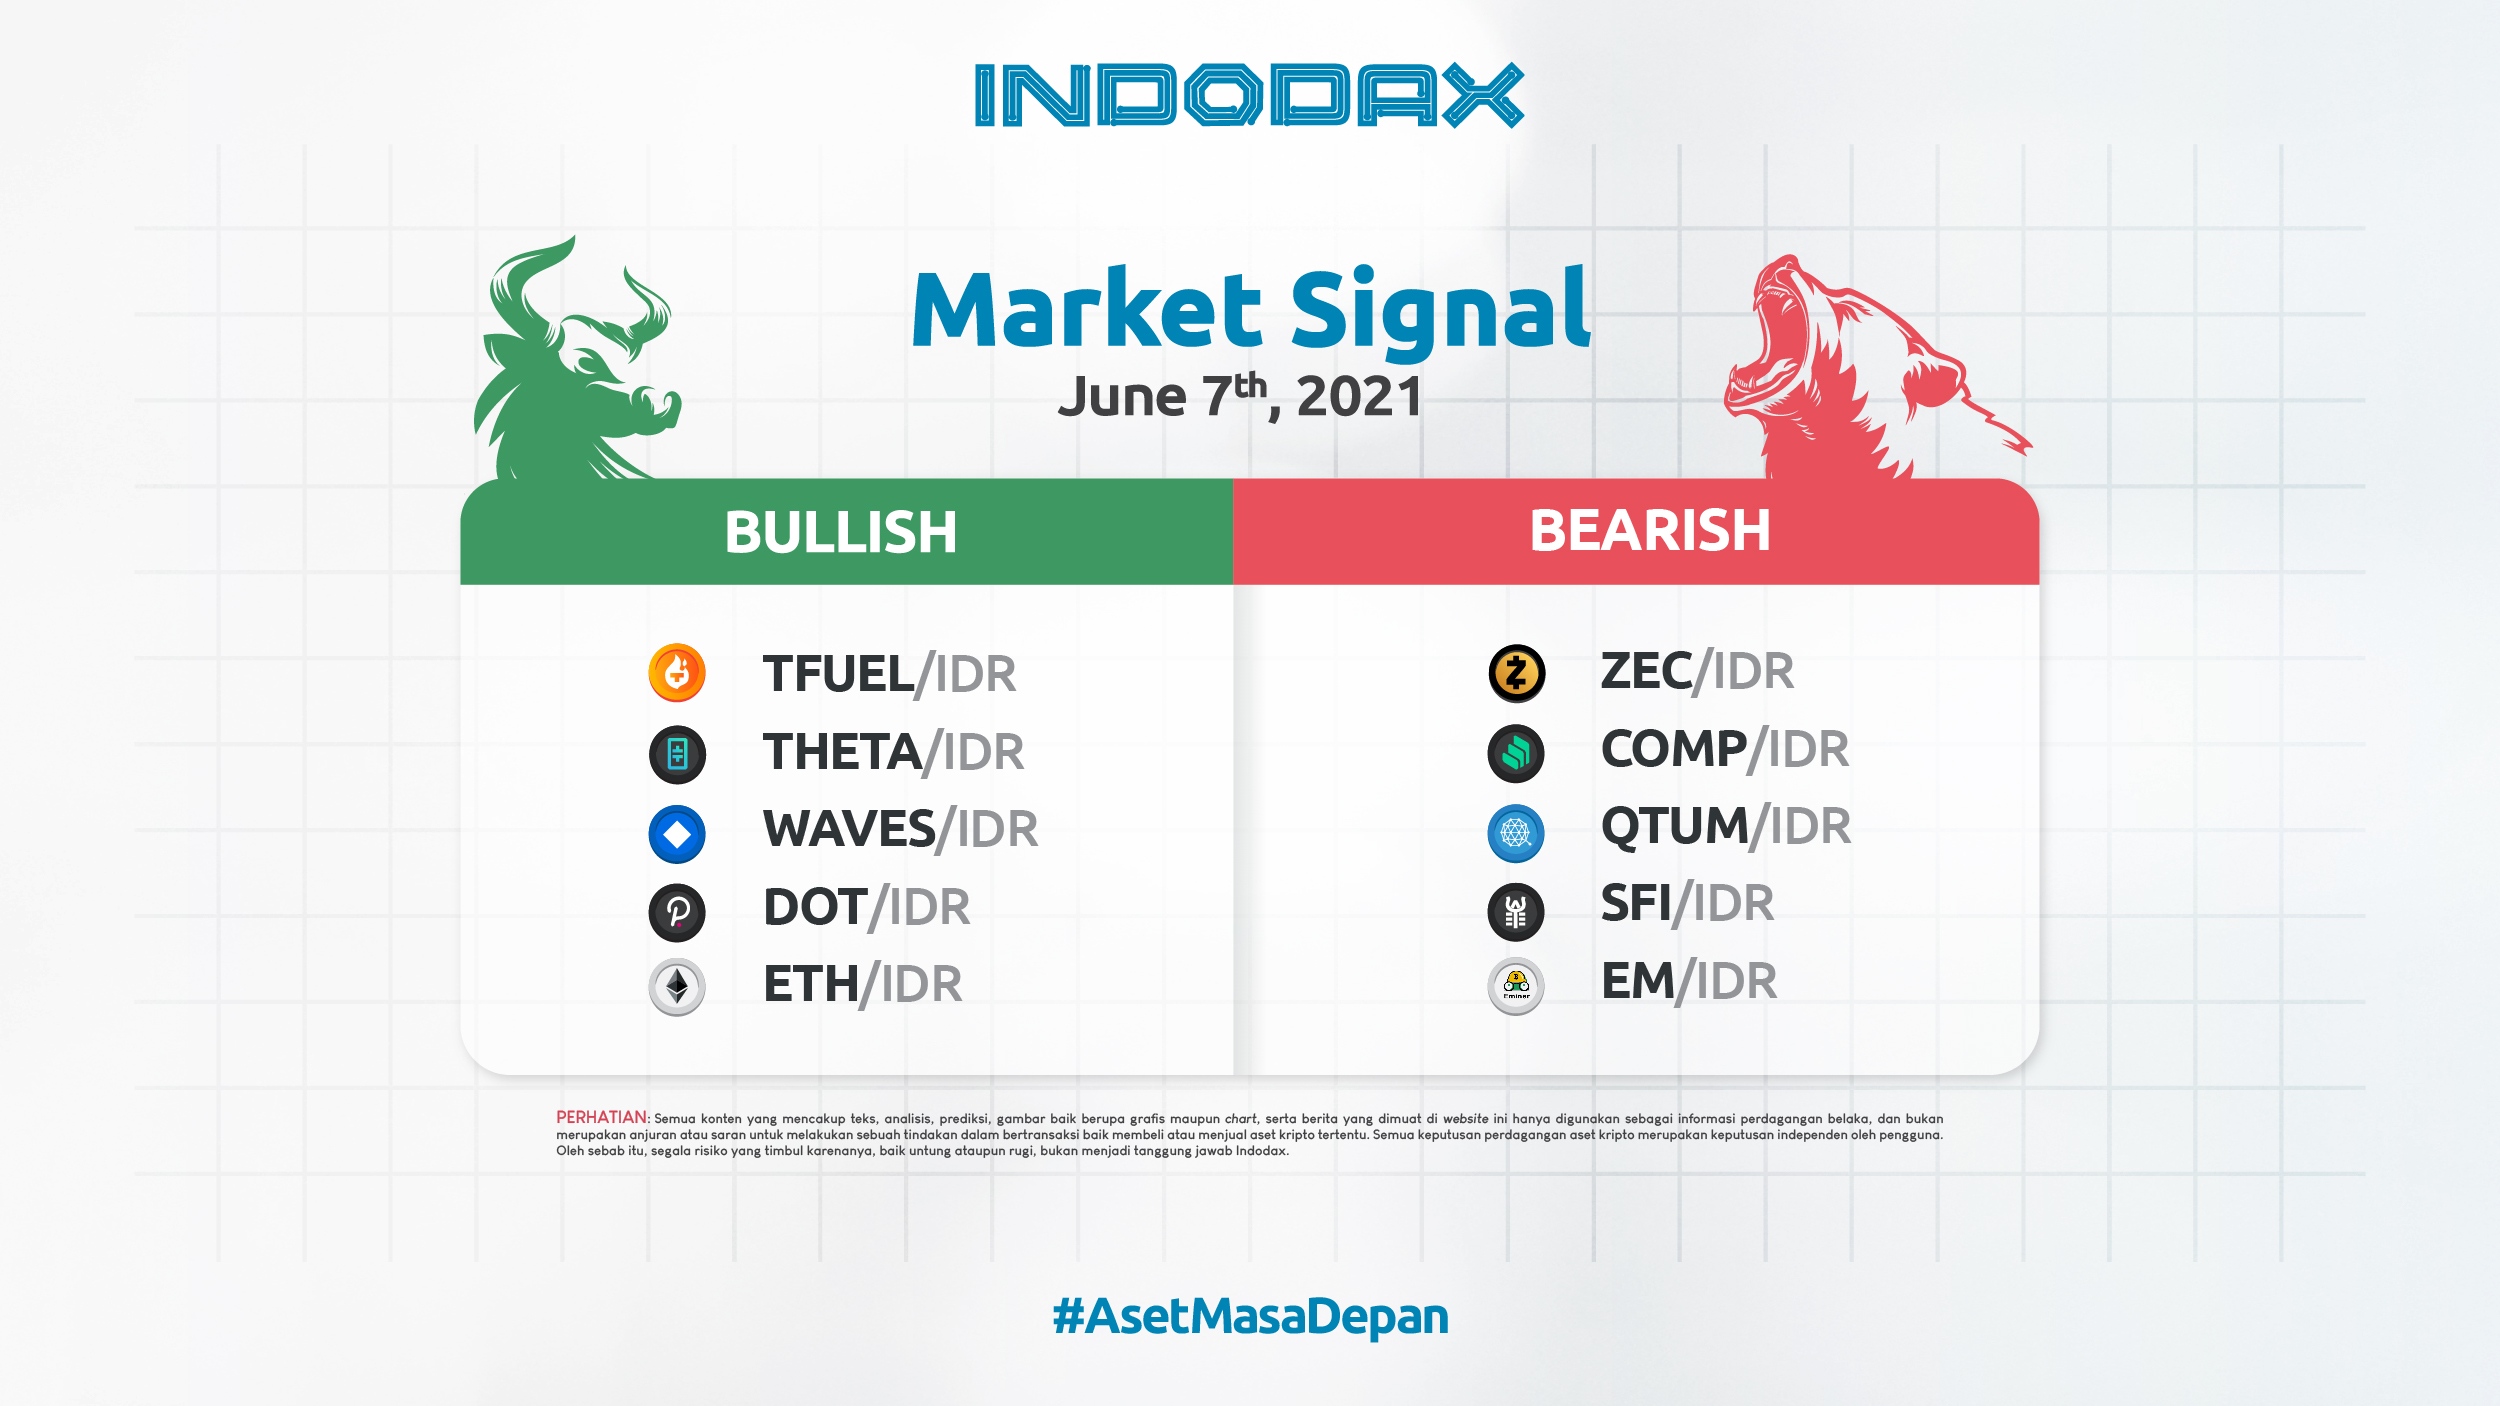 Indodax Market Signal 7th June 2021: 5 Bullish and Bearish Crypto Assets This Week